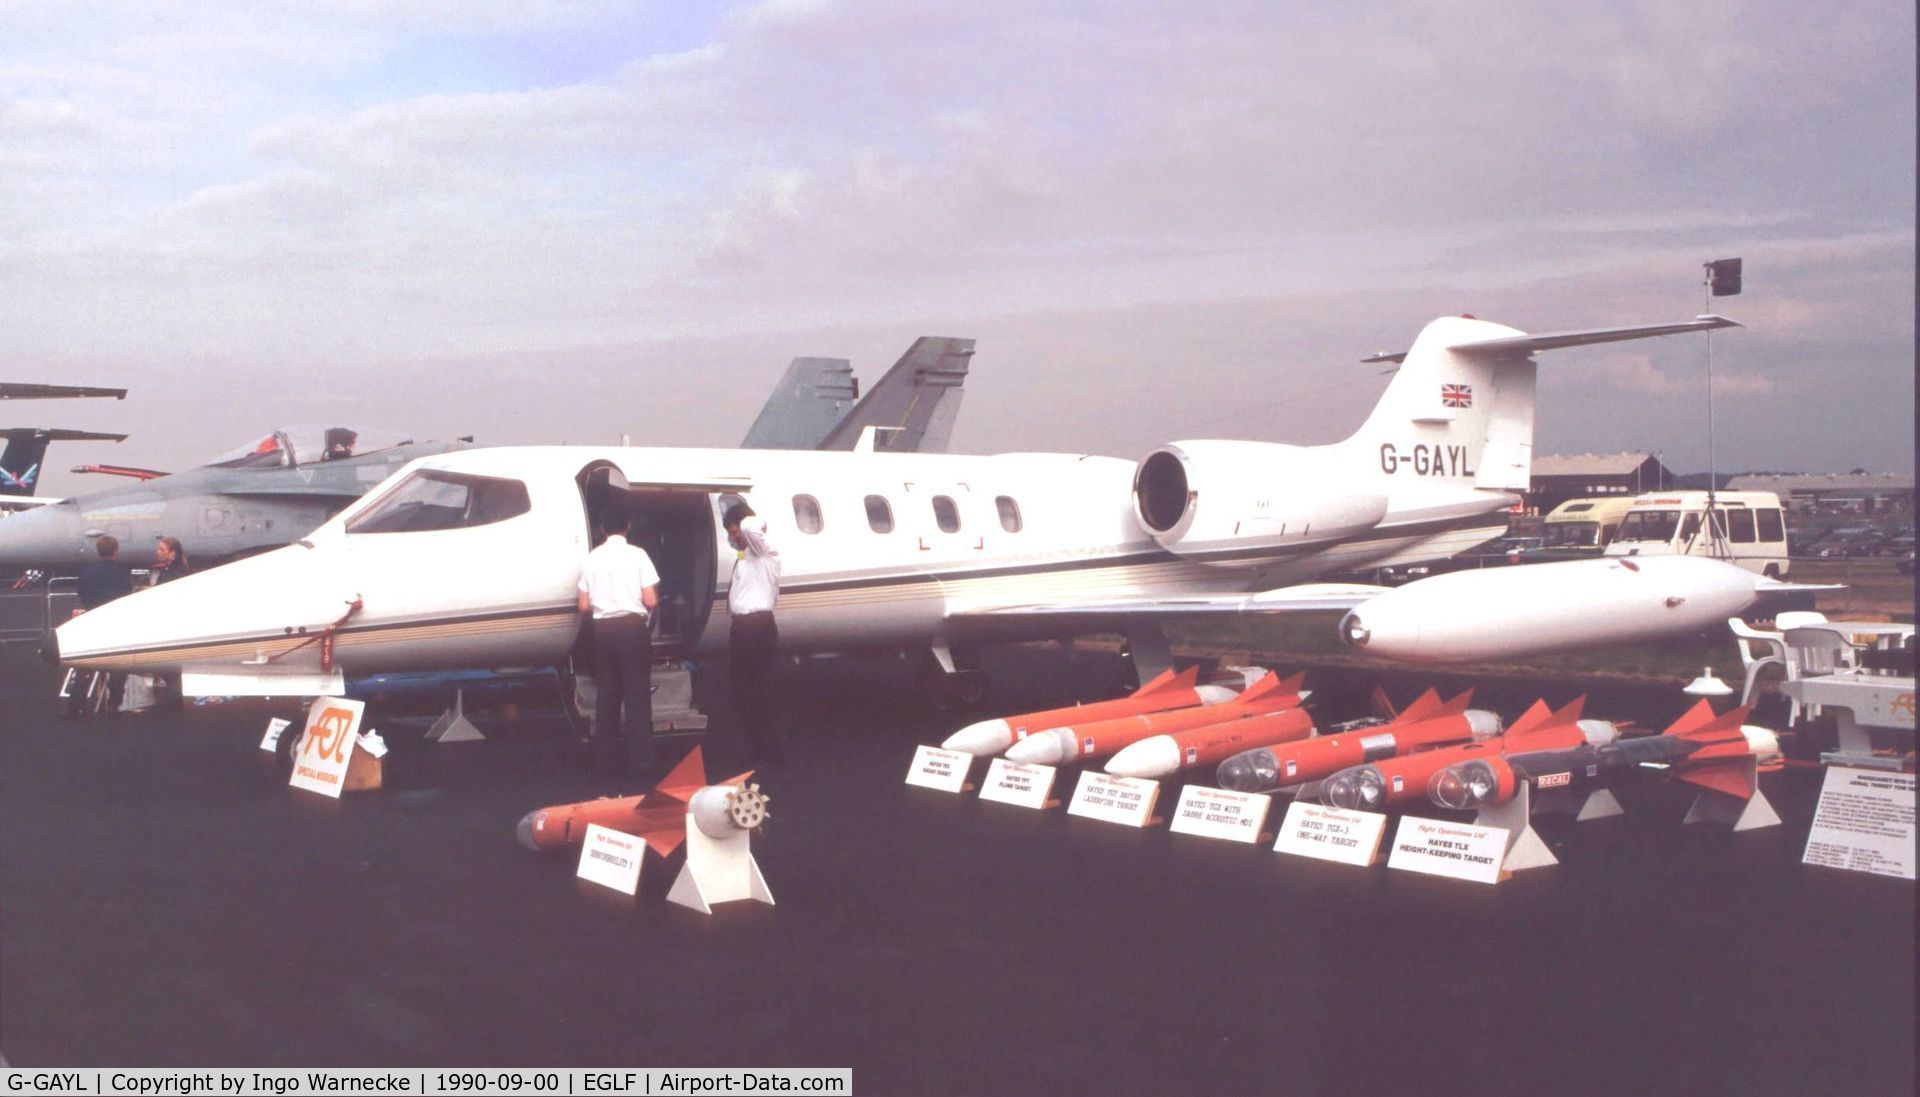 G-GAYL, 1981 Learjet 35A C/N 35A-429, Gates Learjet 35A as target towing plane at Farnborough International 1990